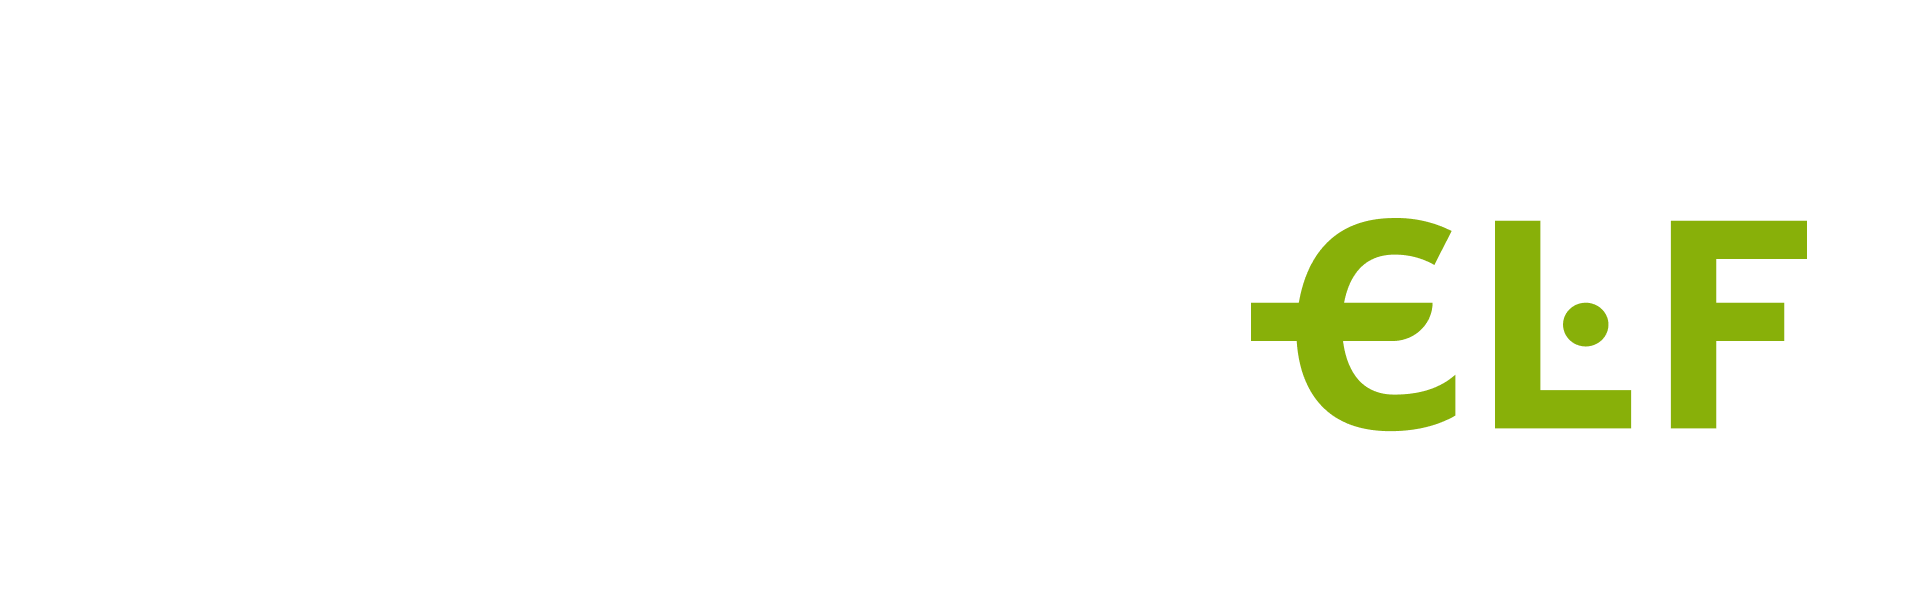 Lucky elf online casino logo